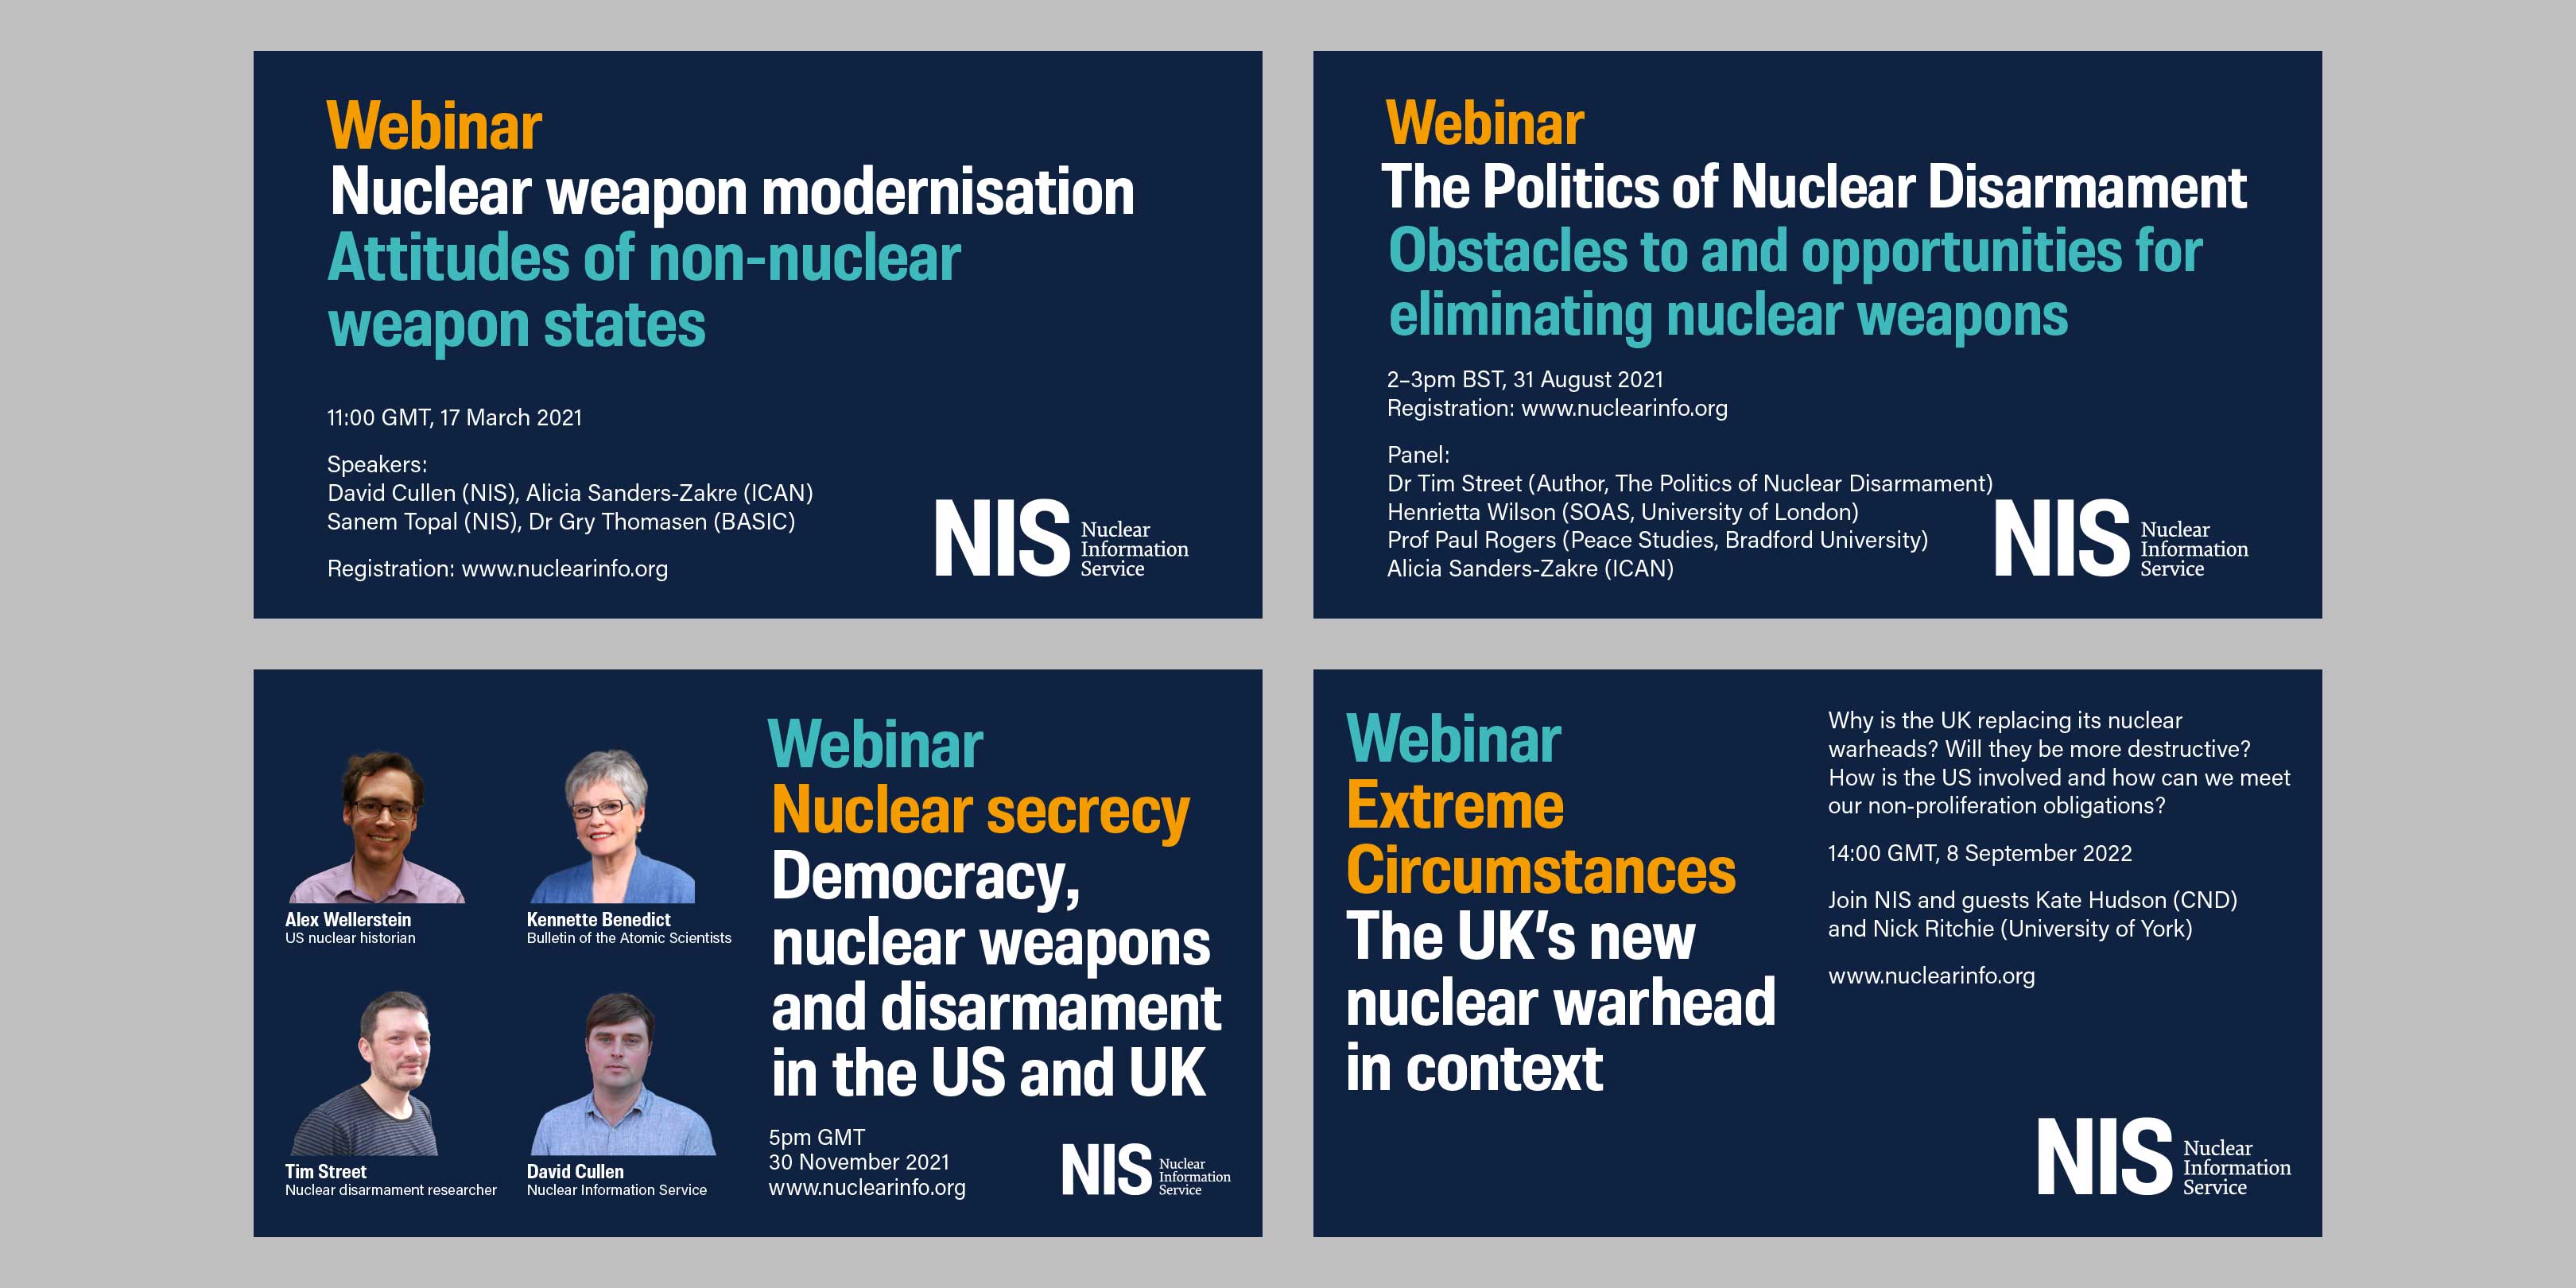 Nuclear Information Service social media adverts for webinars